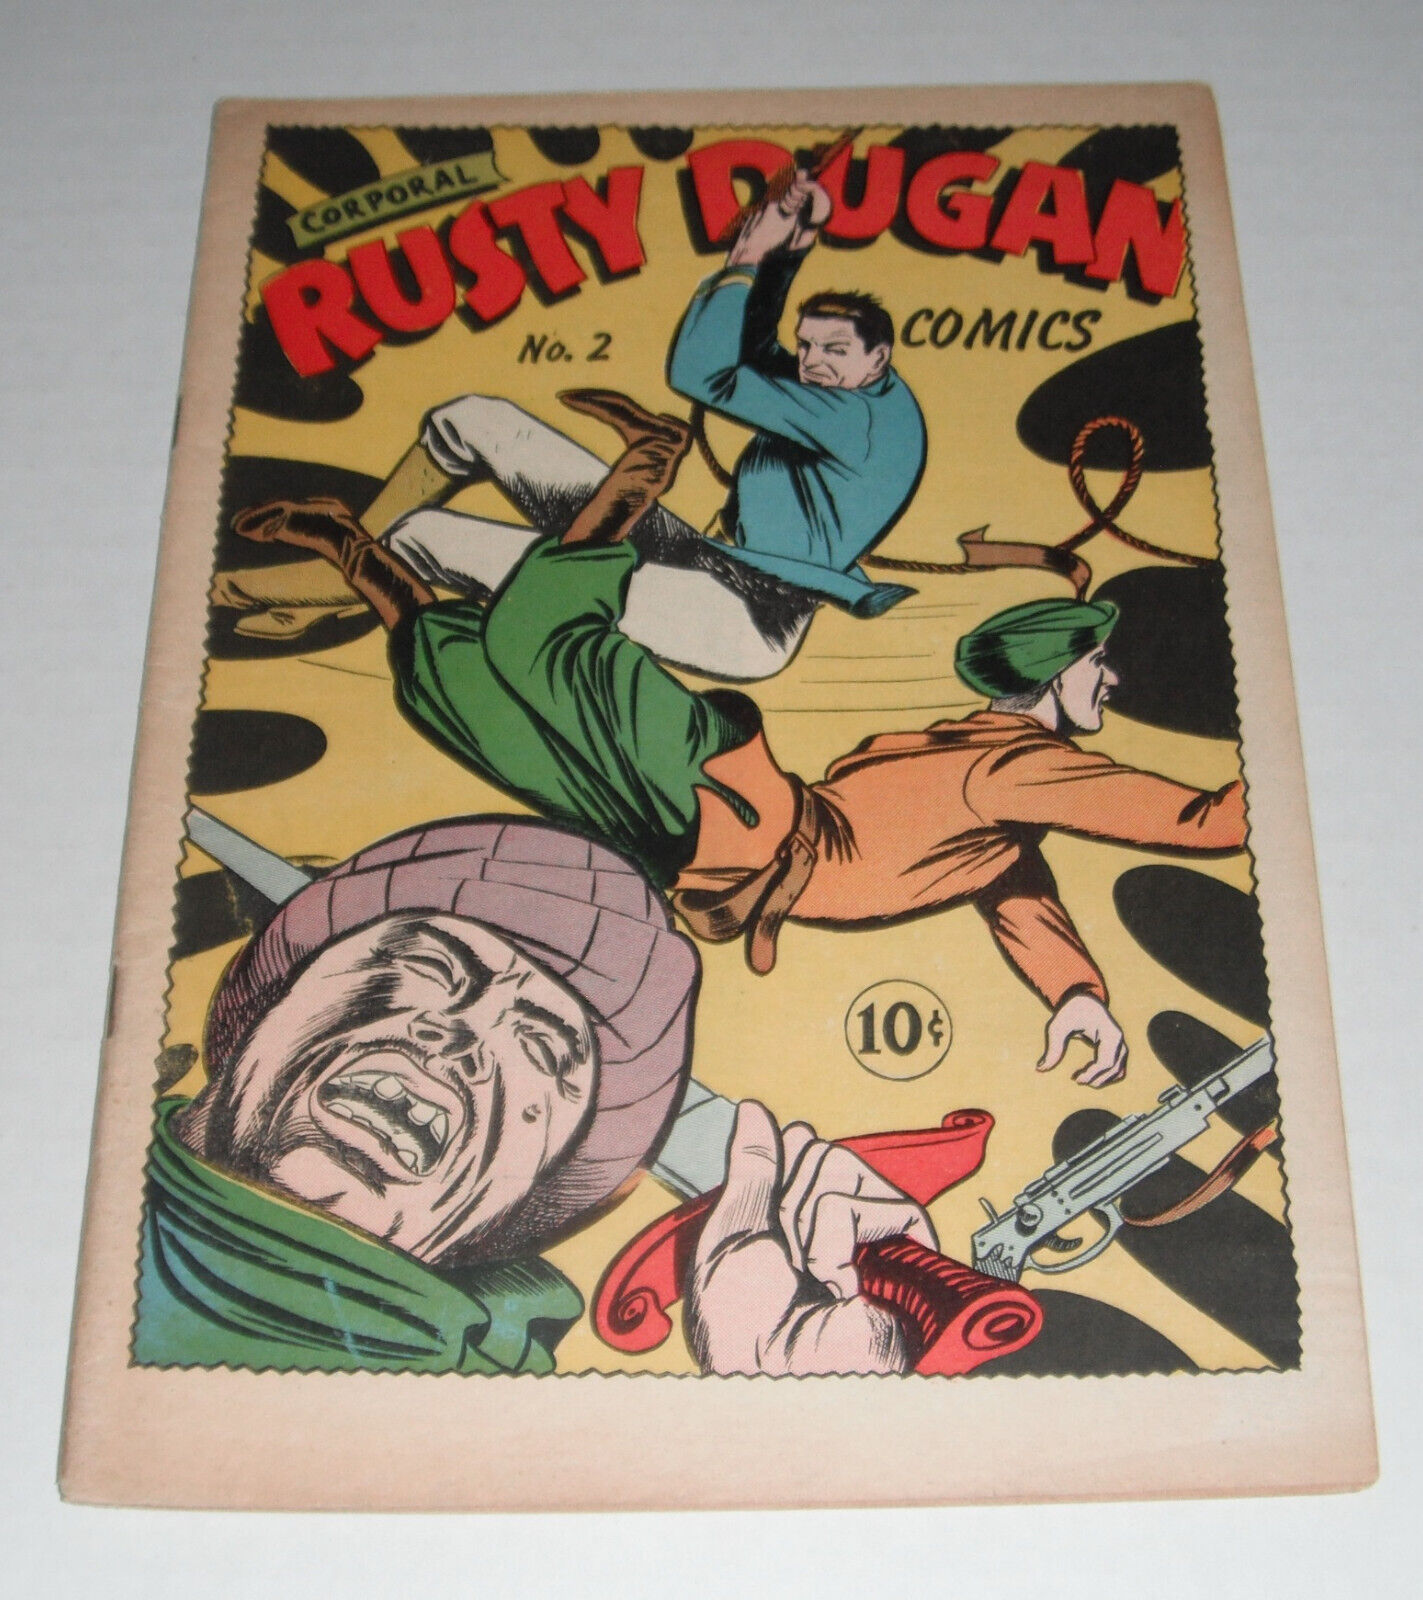 Corporal Rusty Dugan # 2..VG-Fine..5.0 grade..1944 comic--has reprint stories-ri